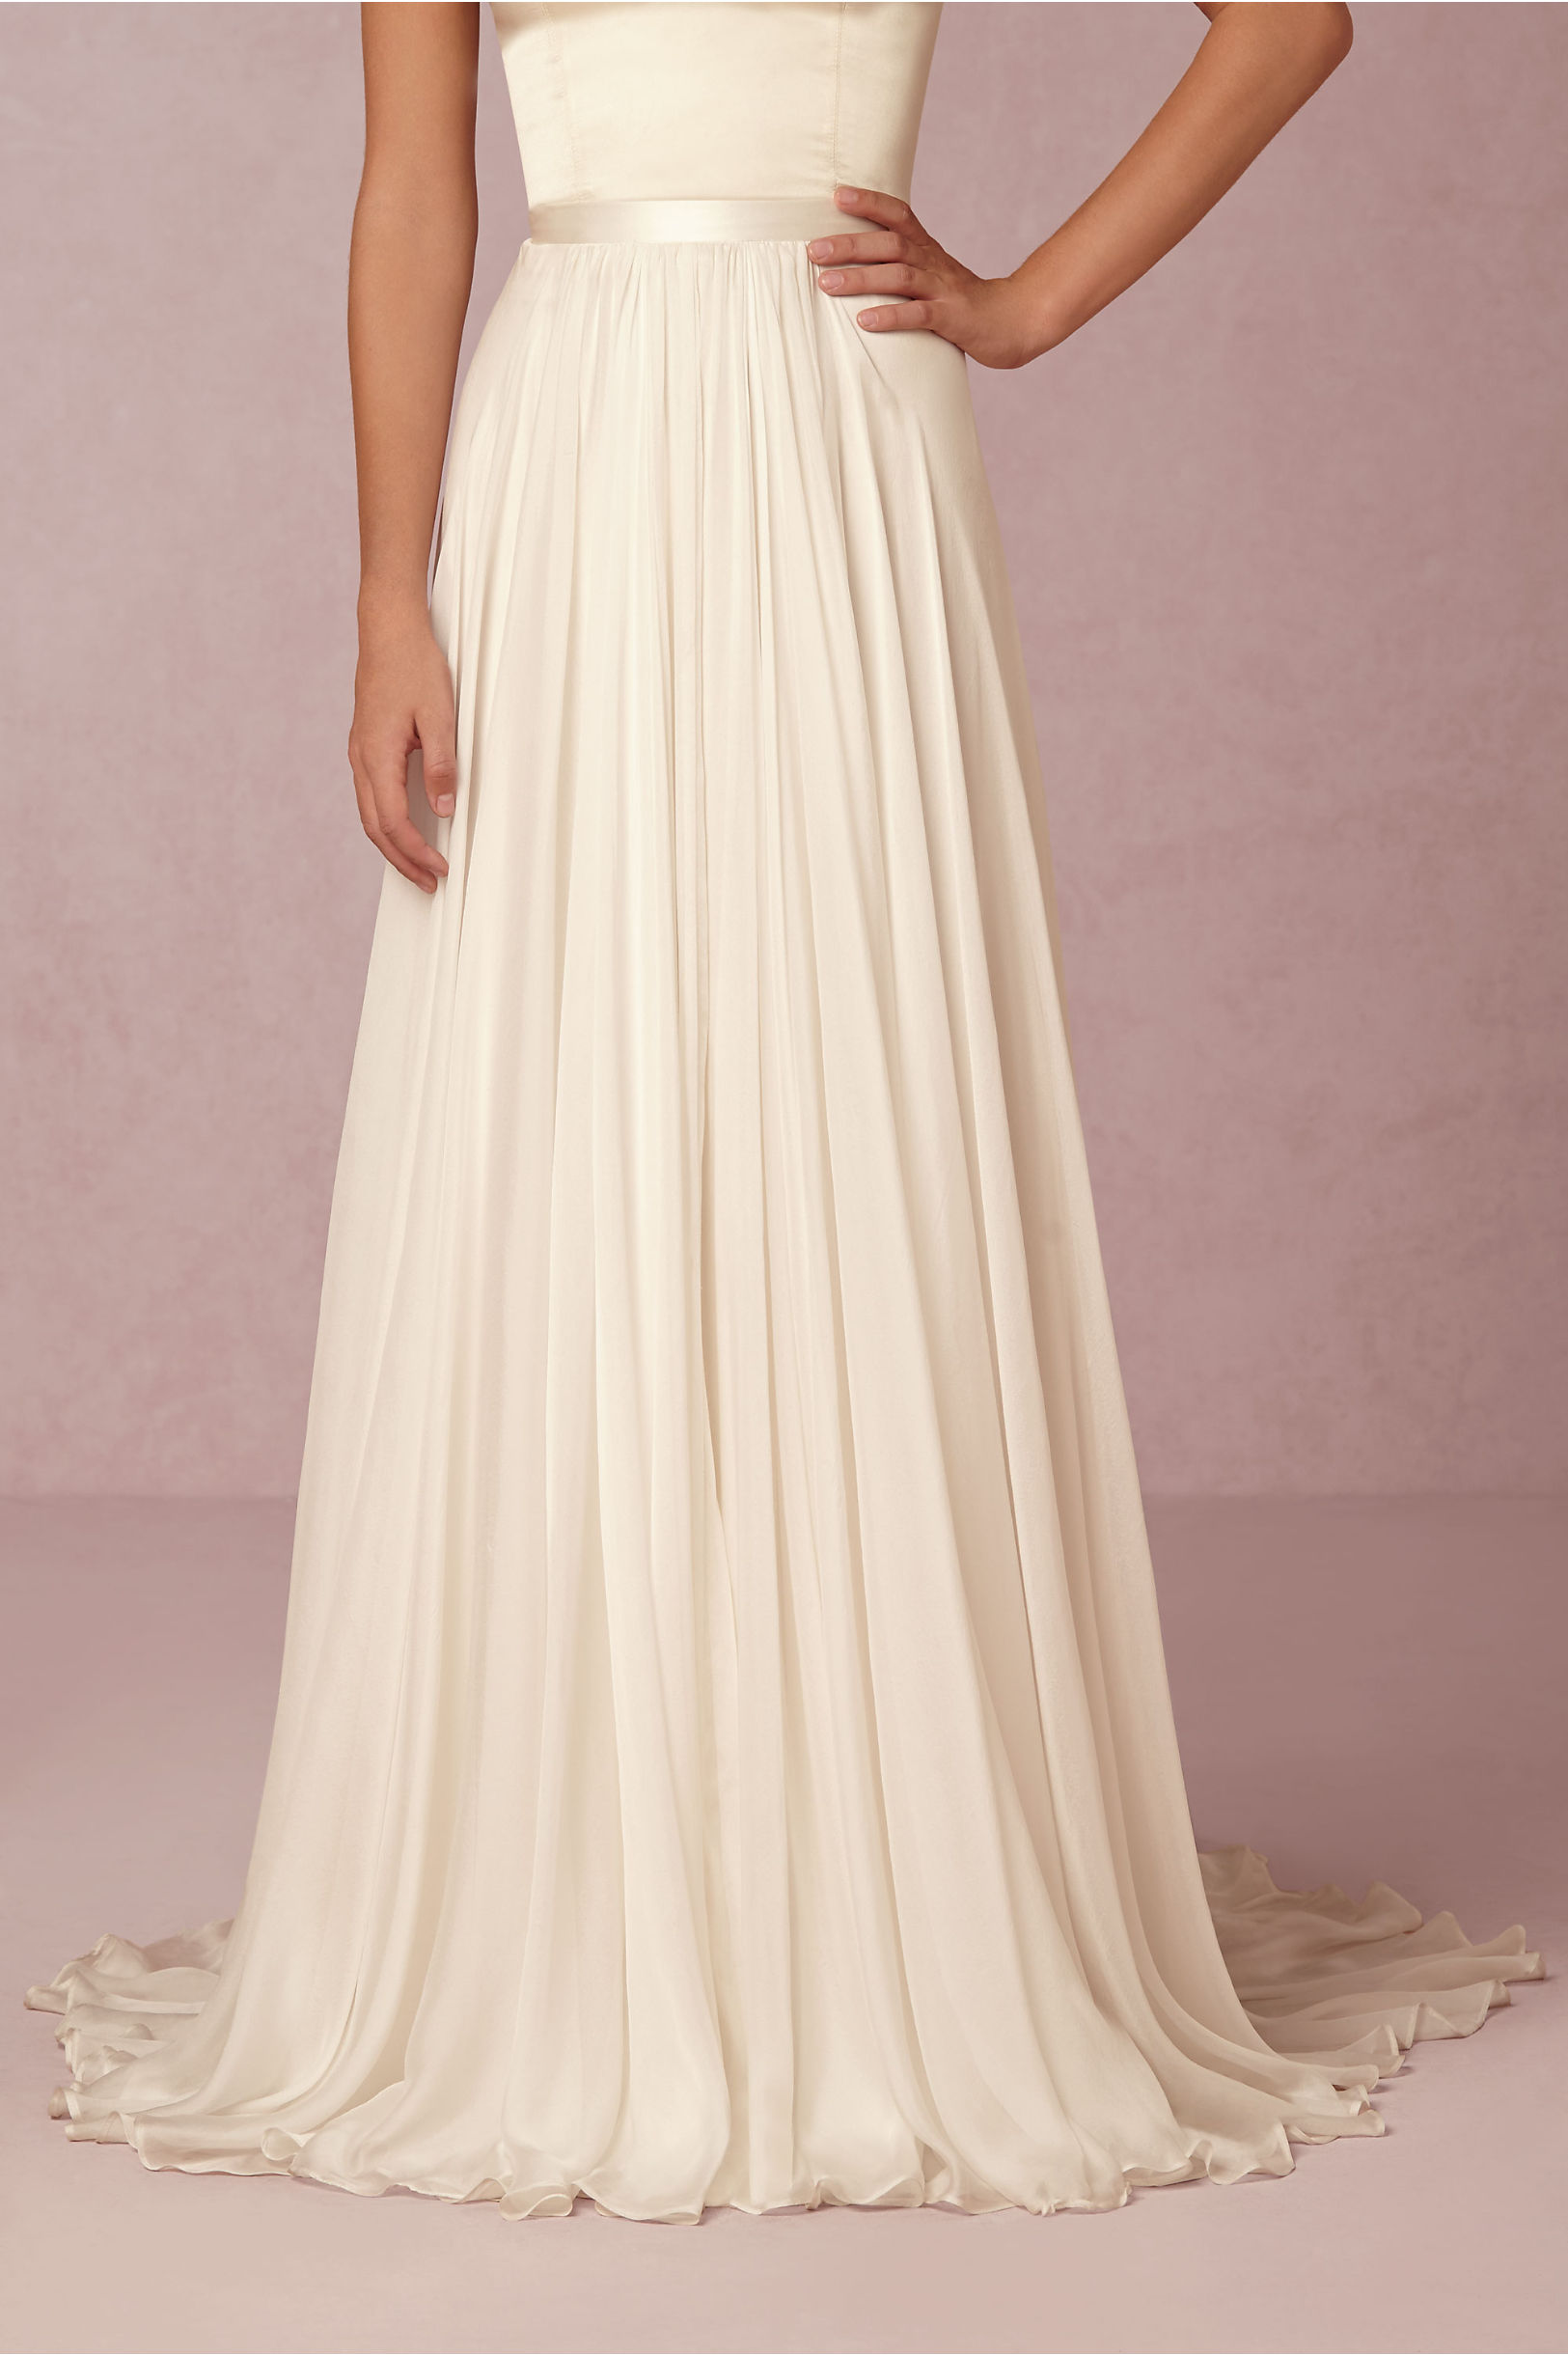 Delia Maxi Skirt in Bride | BHLDN